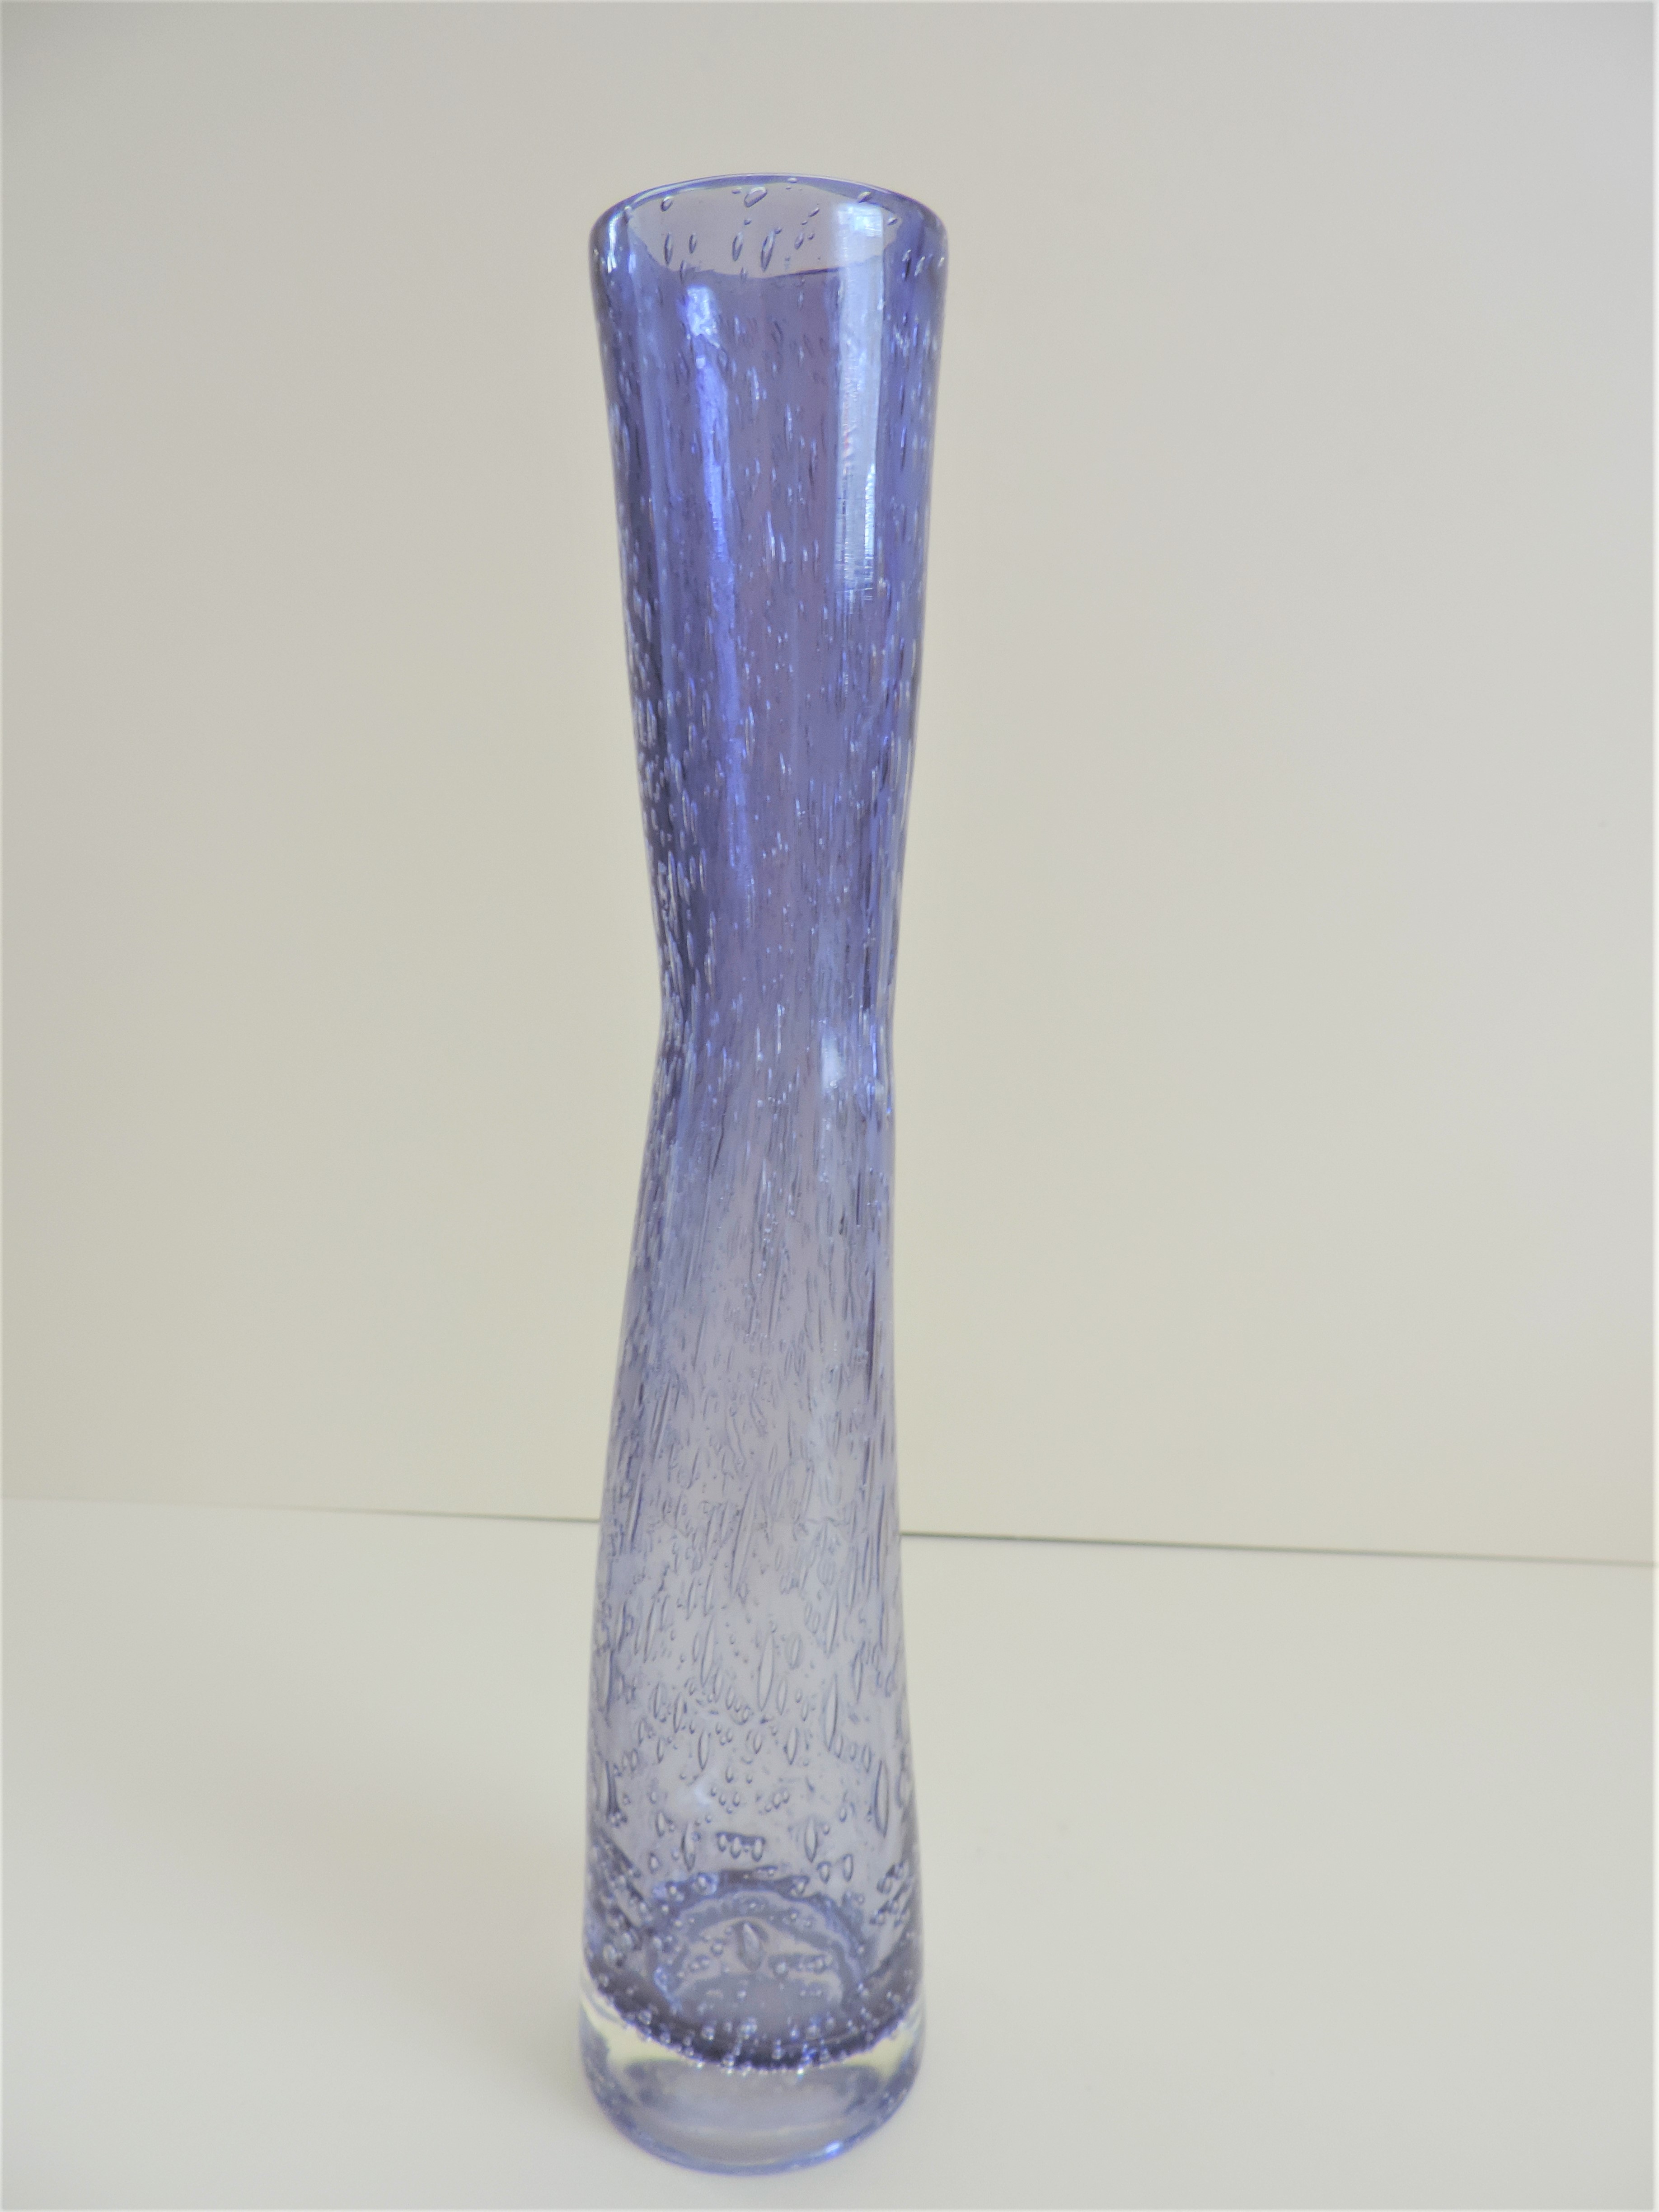 Organic Art Glass Vase 29cm tall